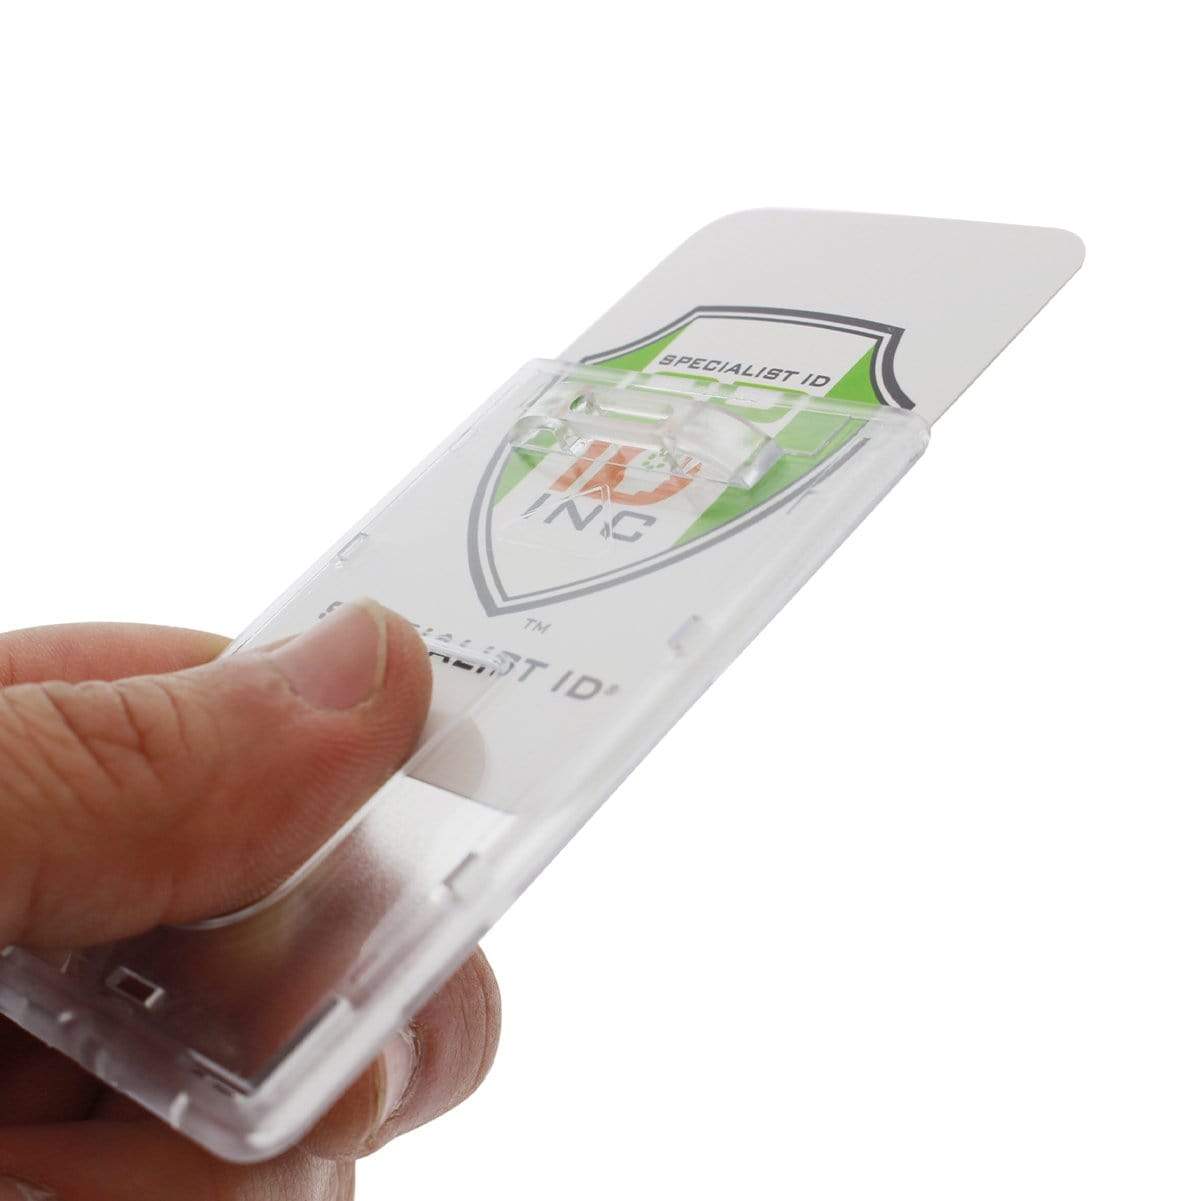 Premium Top Load Slim Rigid Plastic ID Badge Holder with Easy Access Thumb Slide Removal (706-N)